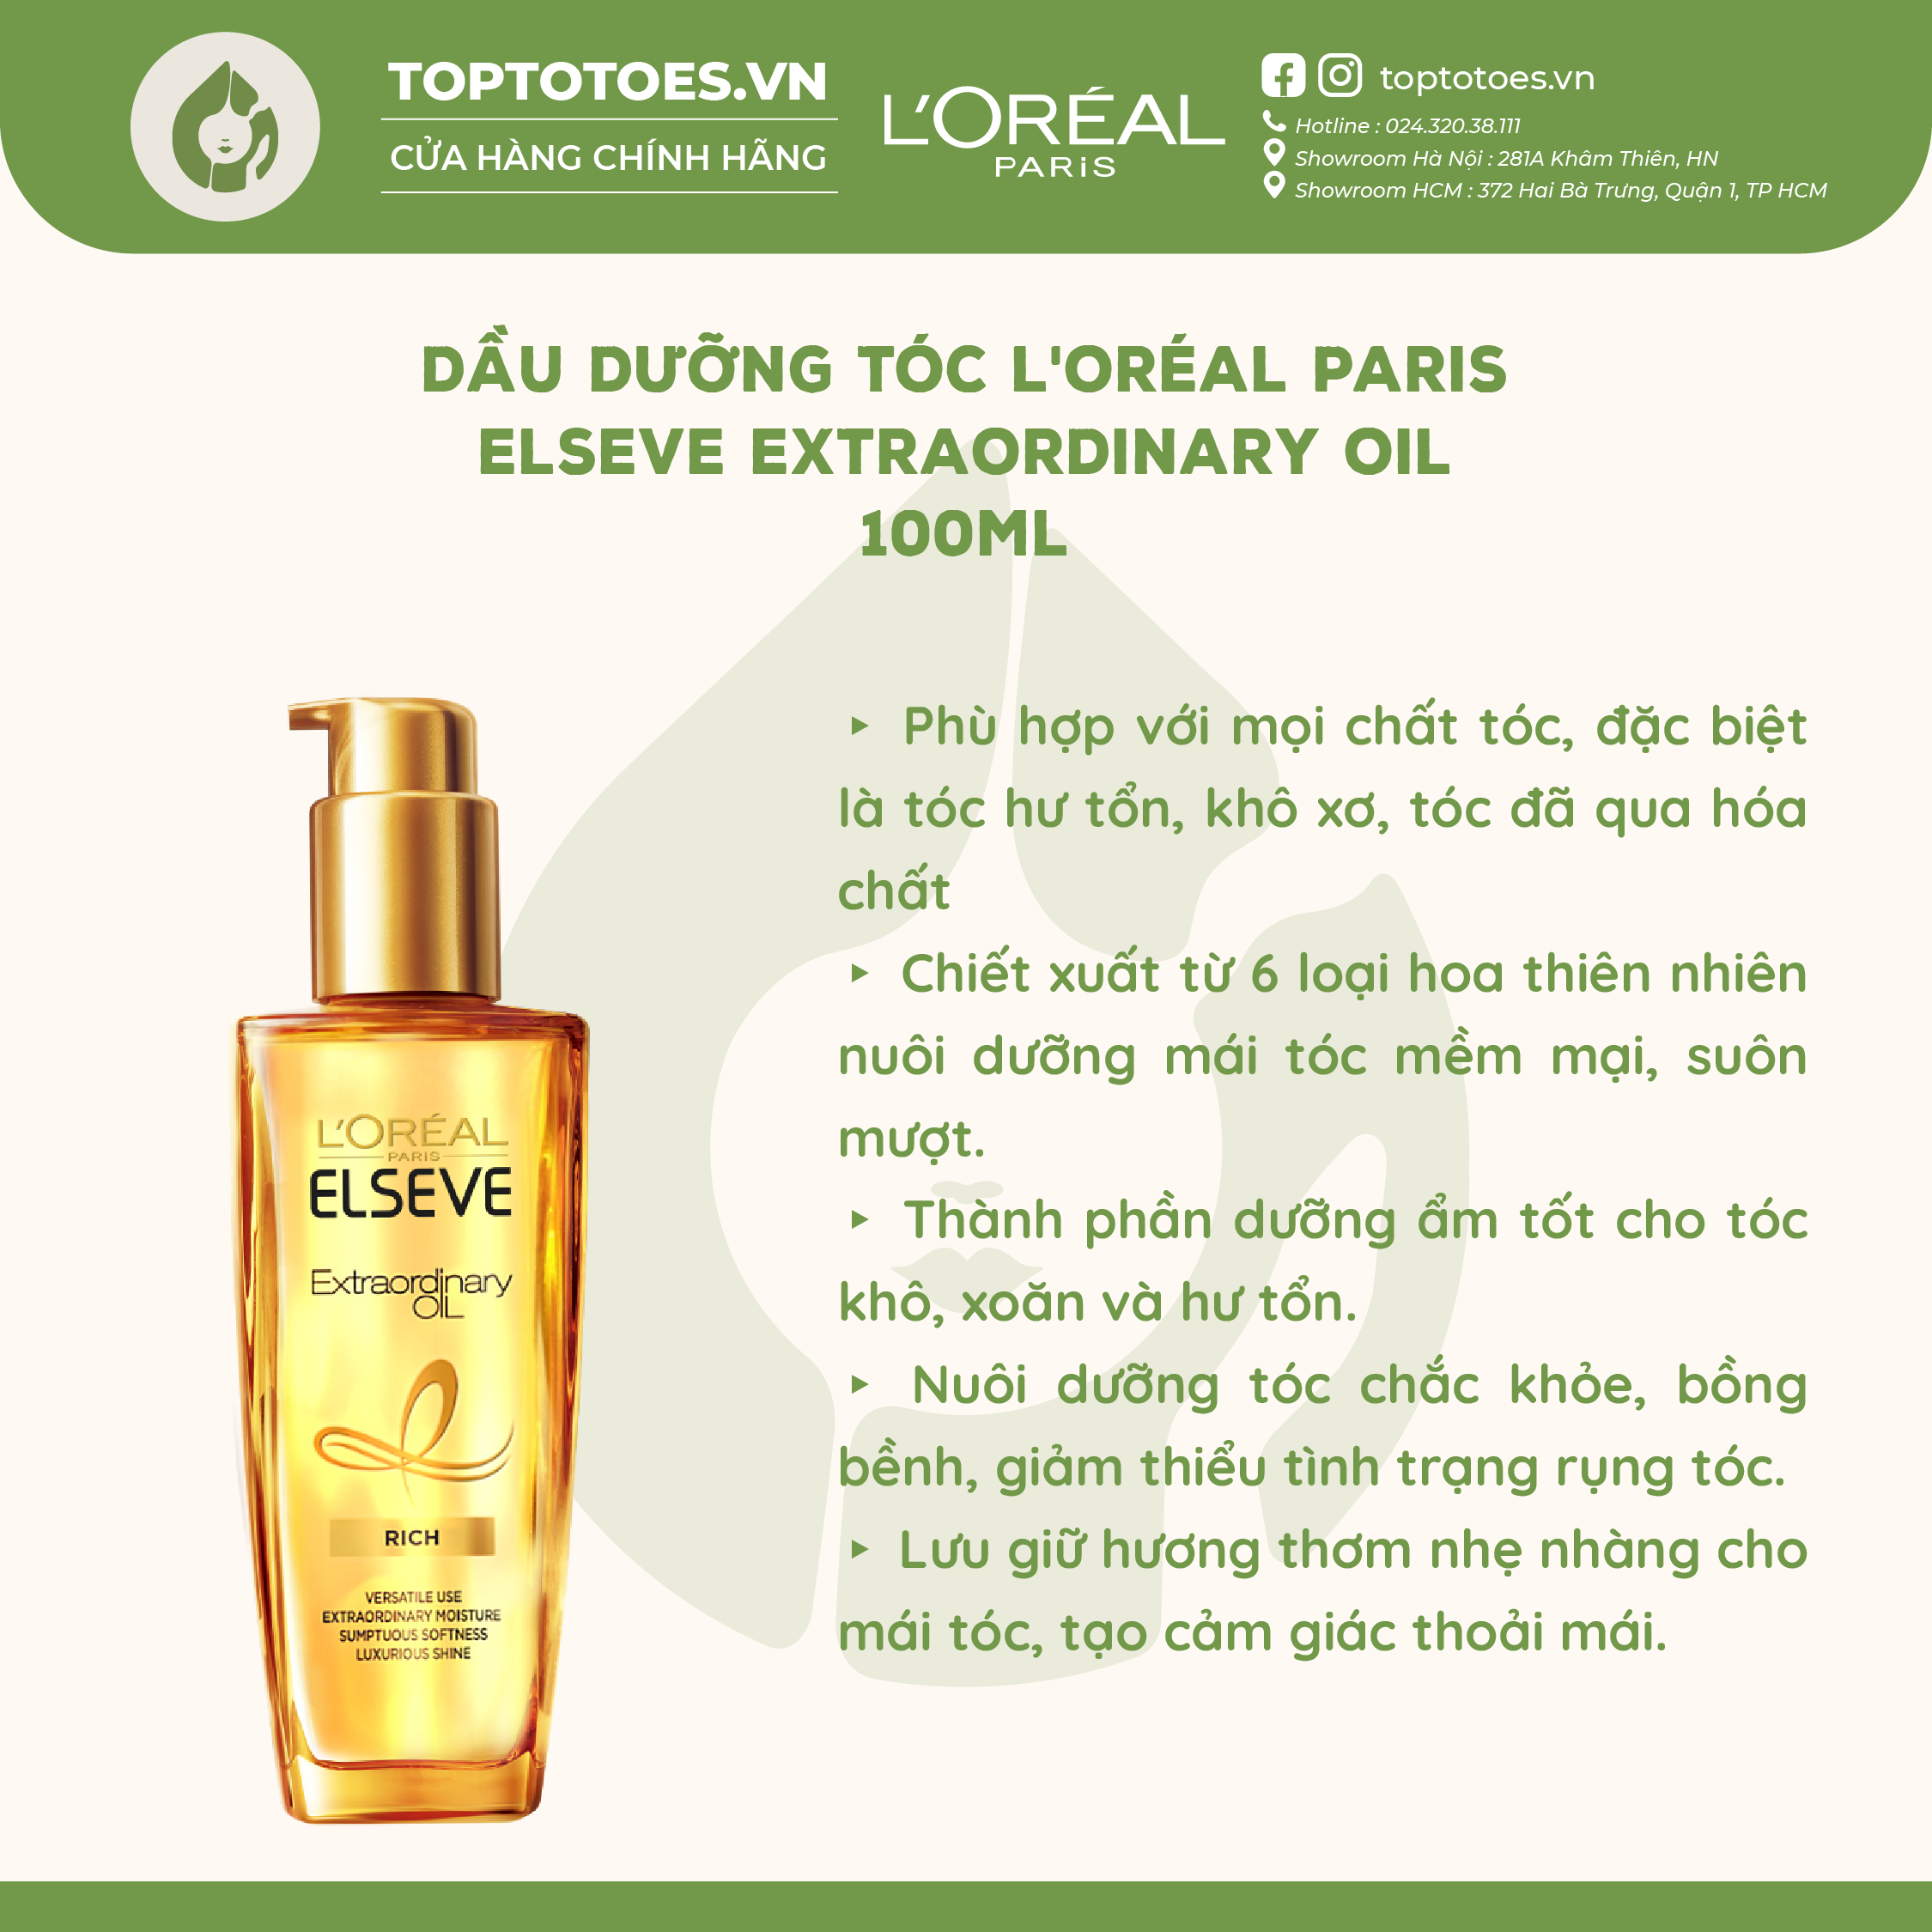 Dầu dưỡng tóc LOréal Paris Elseve Extraordinary Oil giúp tóc bóng mượt  chai 100ml 072023  nhathuocankhangcom